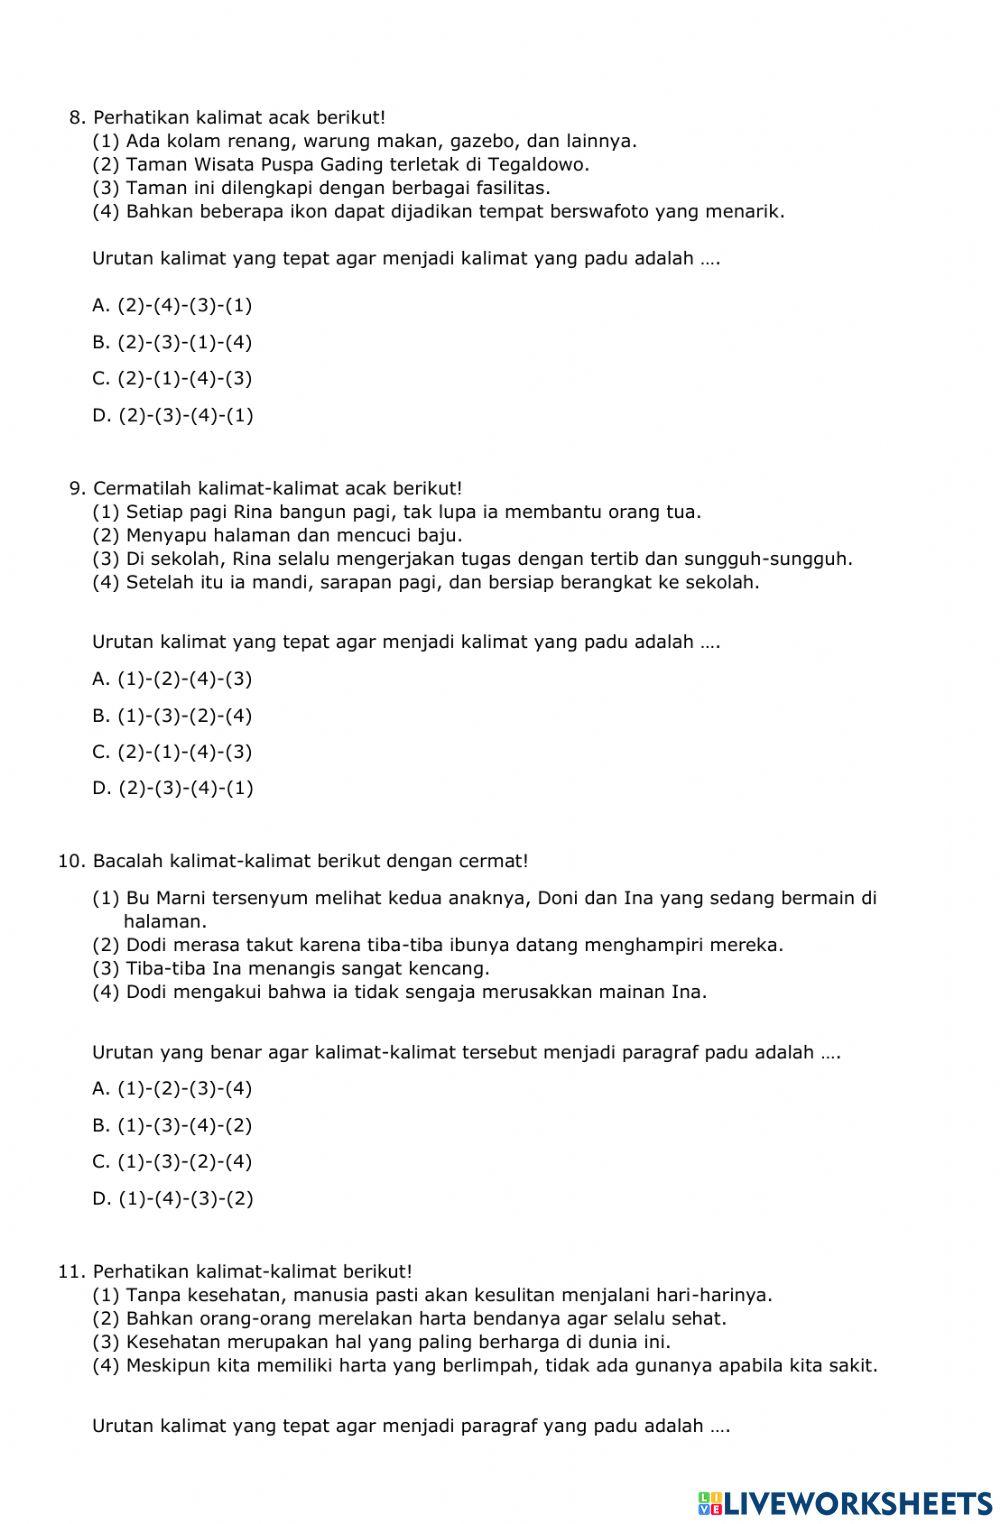 Latihan Bahasa Indonesia tema 8